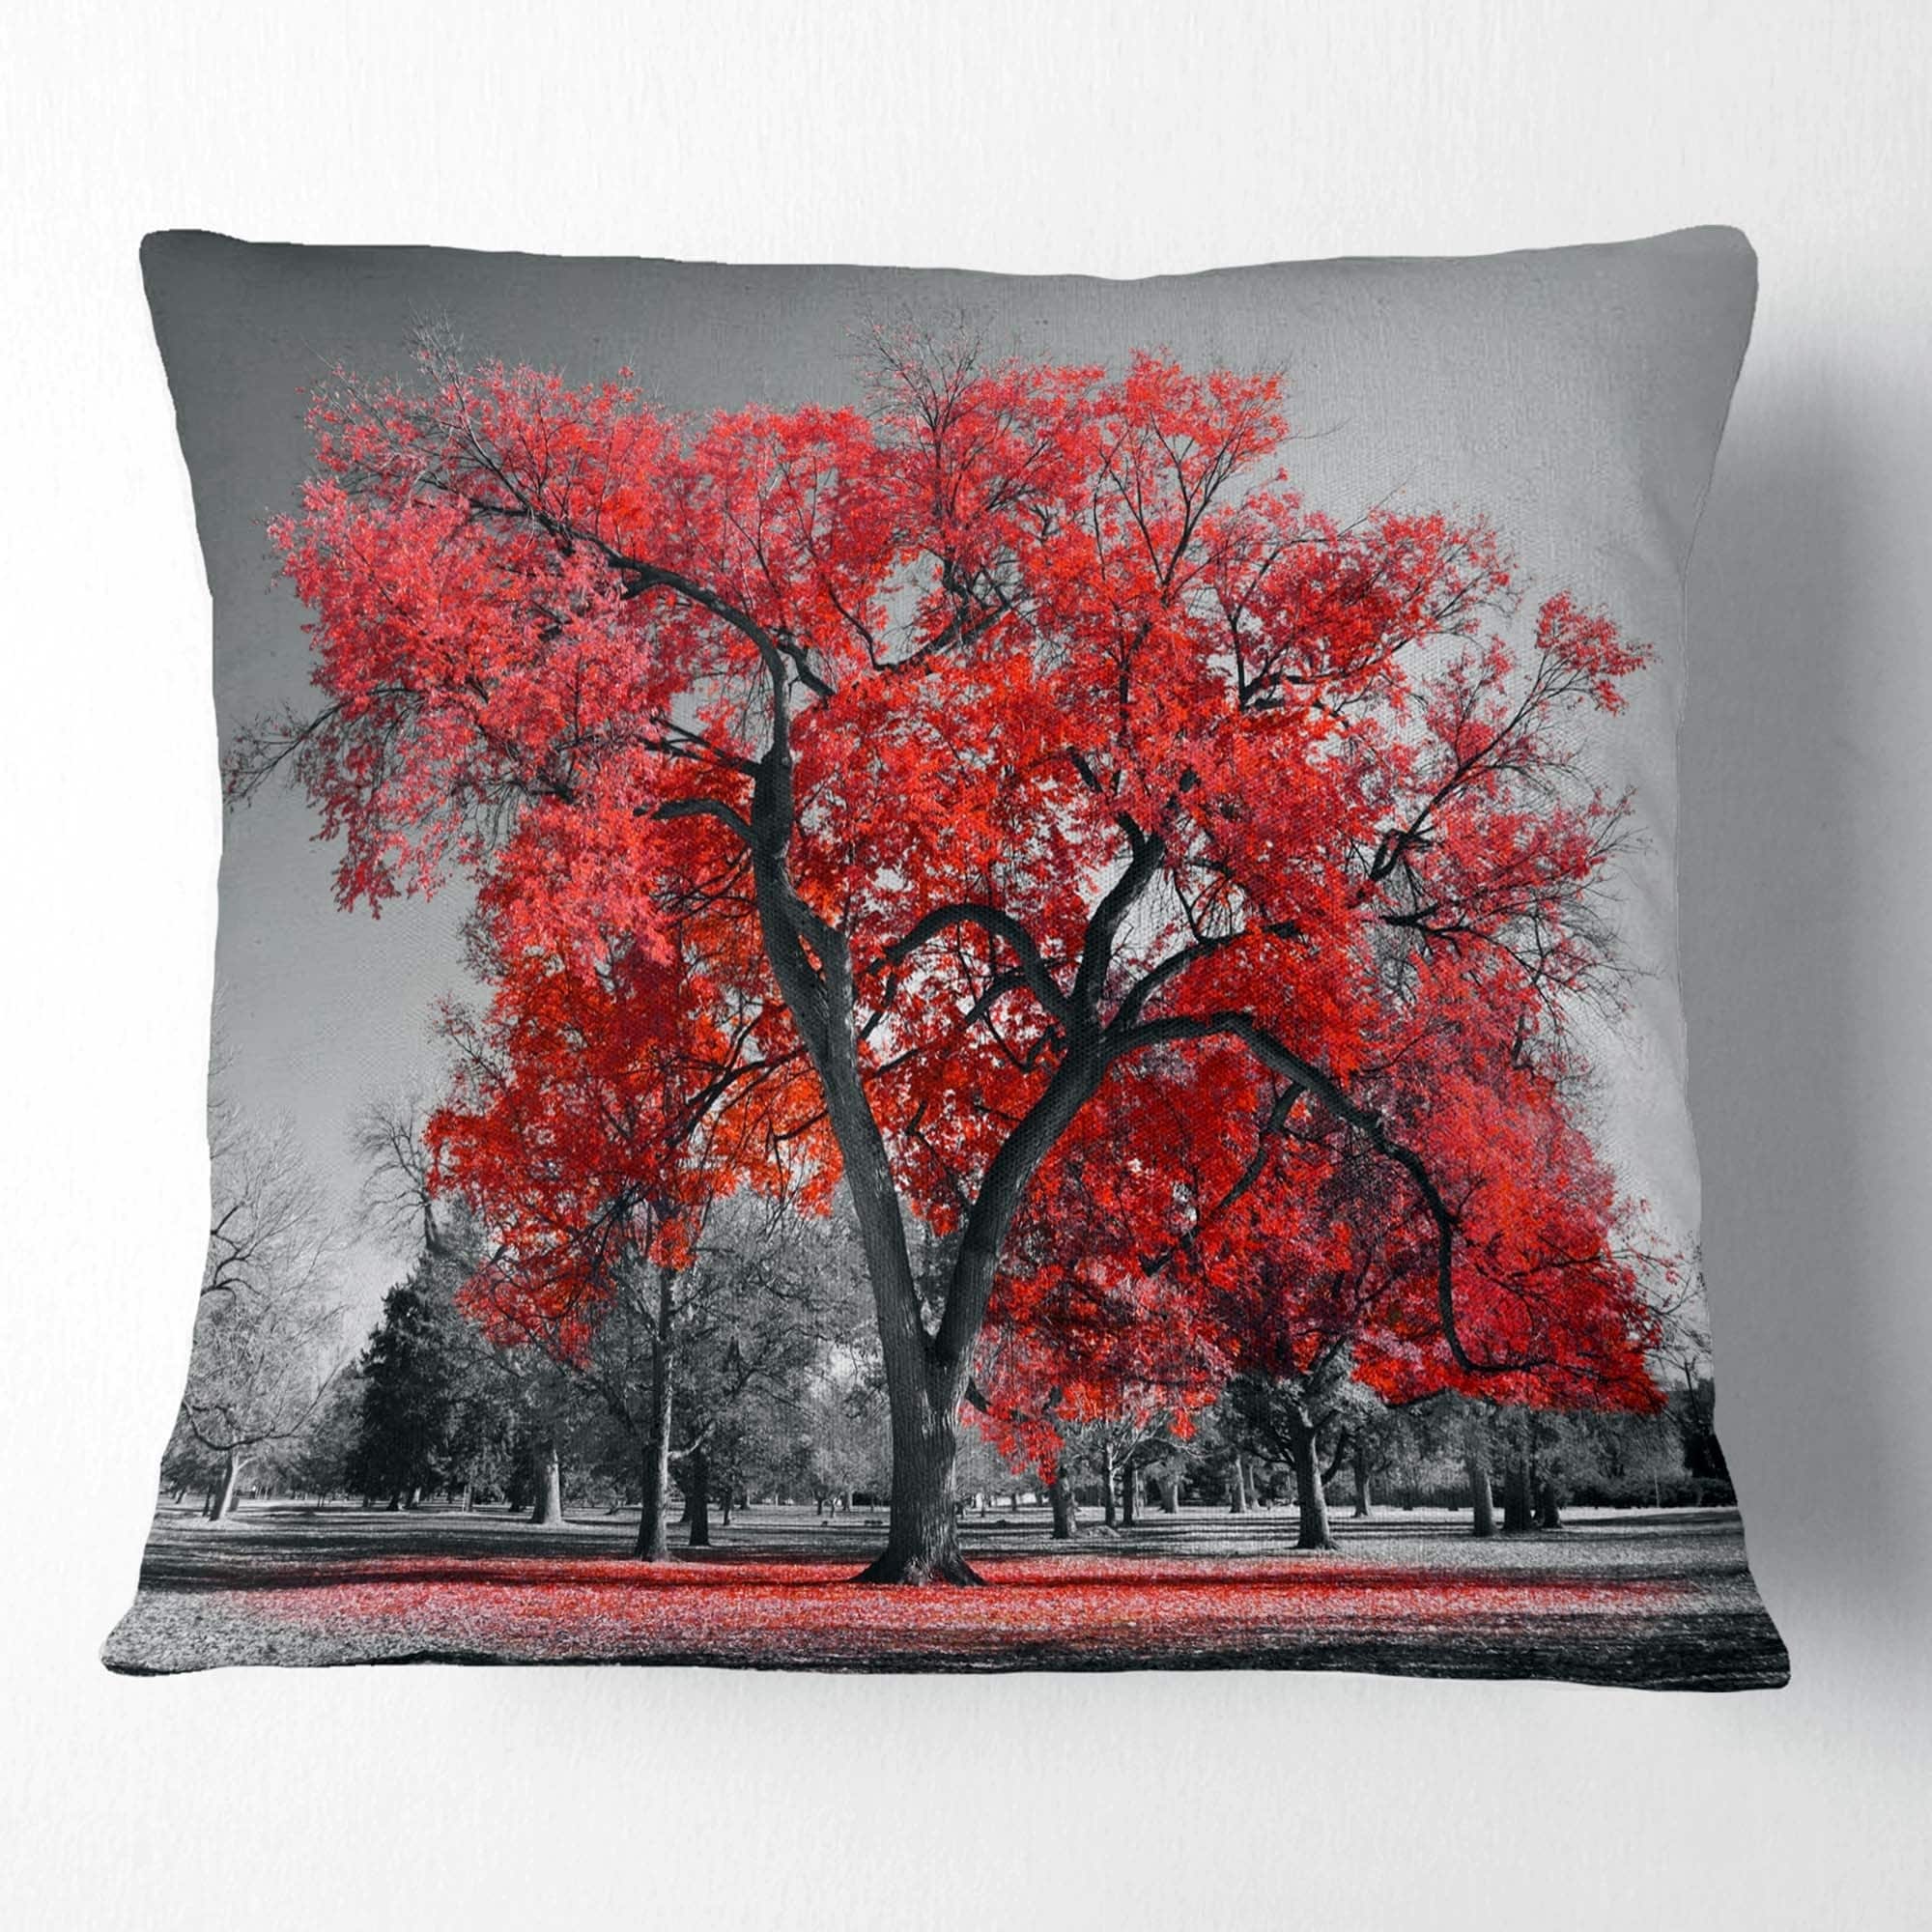 https://ak1.ostkcdn.com/images/products/20890861/Designart-Big-Red-Tree-on-Foggy-Day-Landscape-Printed-Throw-Pillow-4ad77ec9-7275-487d-8207-40e8c87119b3.jpg